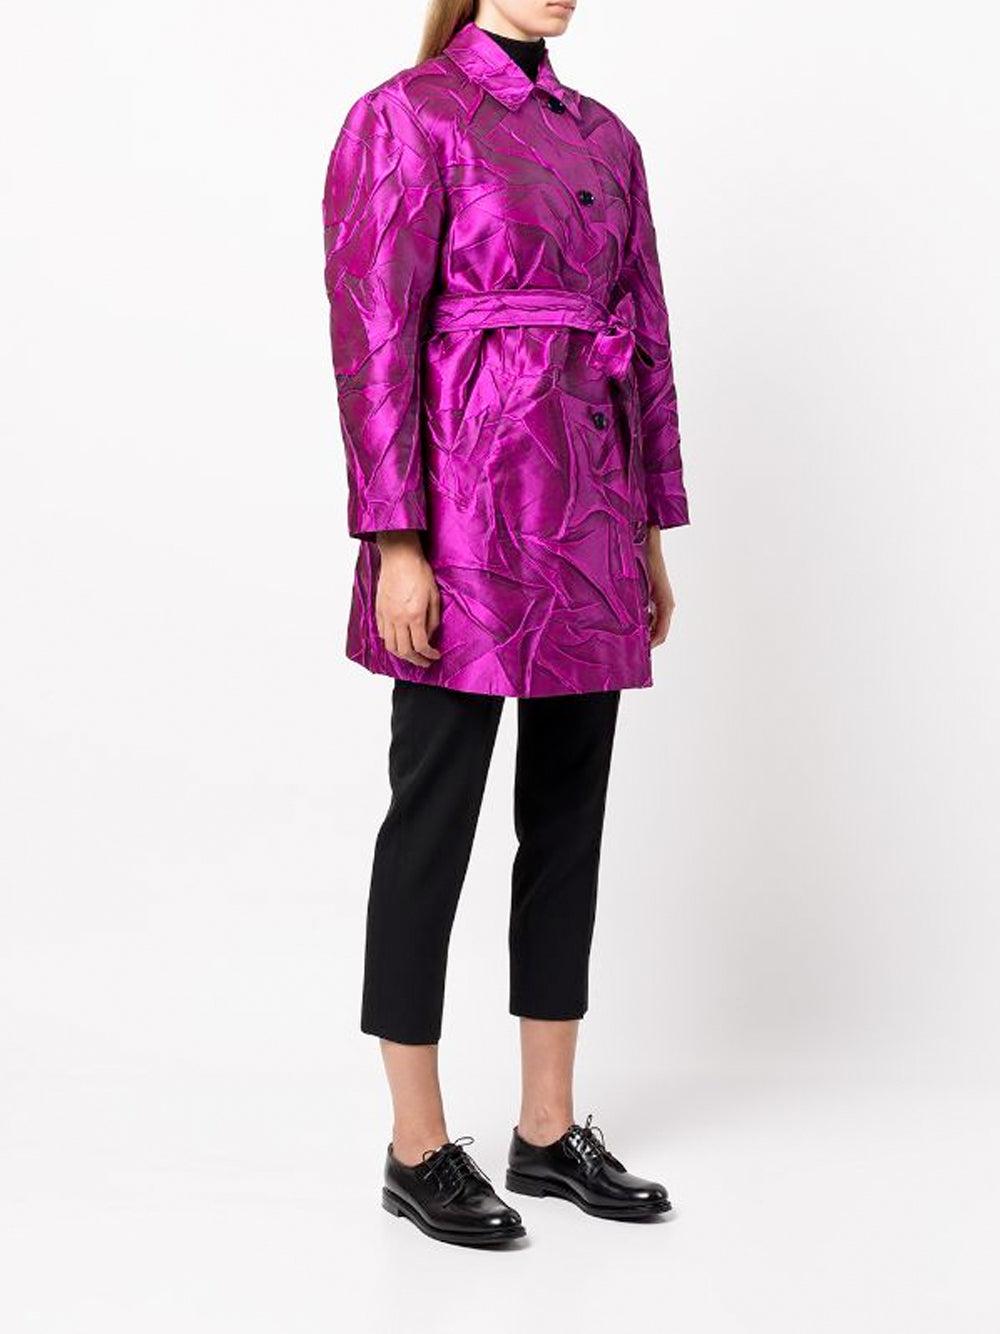 Dries Van Noten Belted Jacquard Jacket in Pink | Lyst